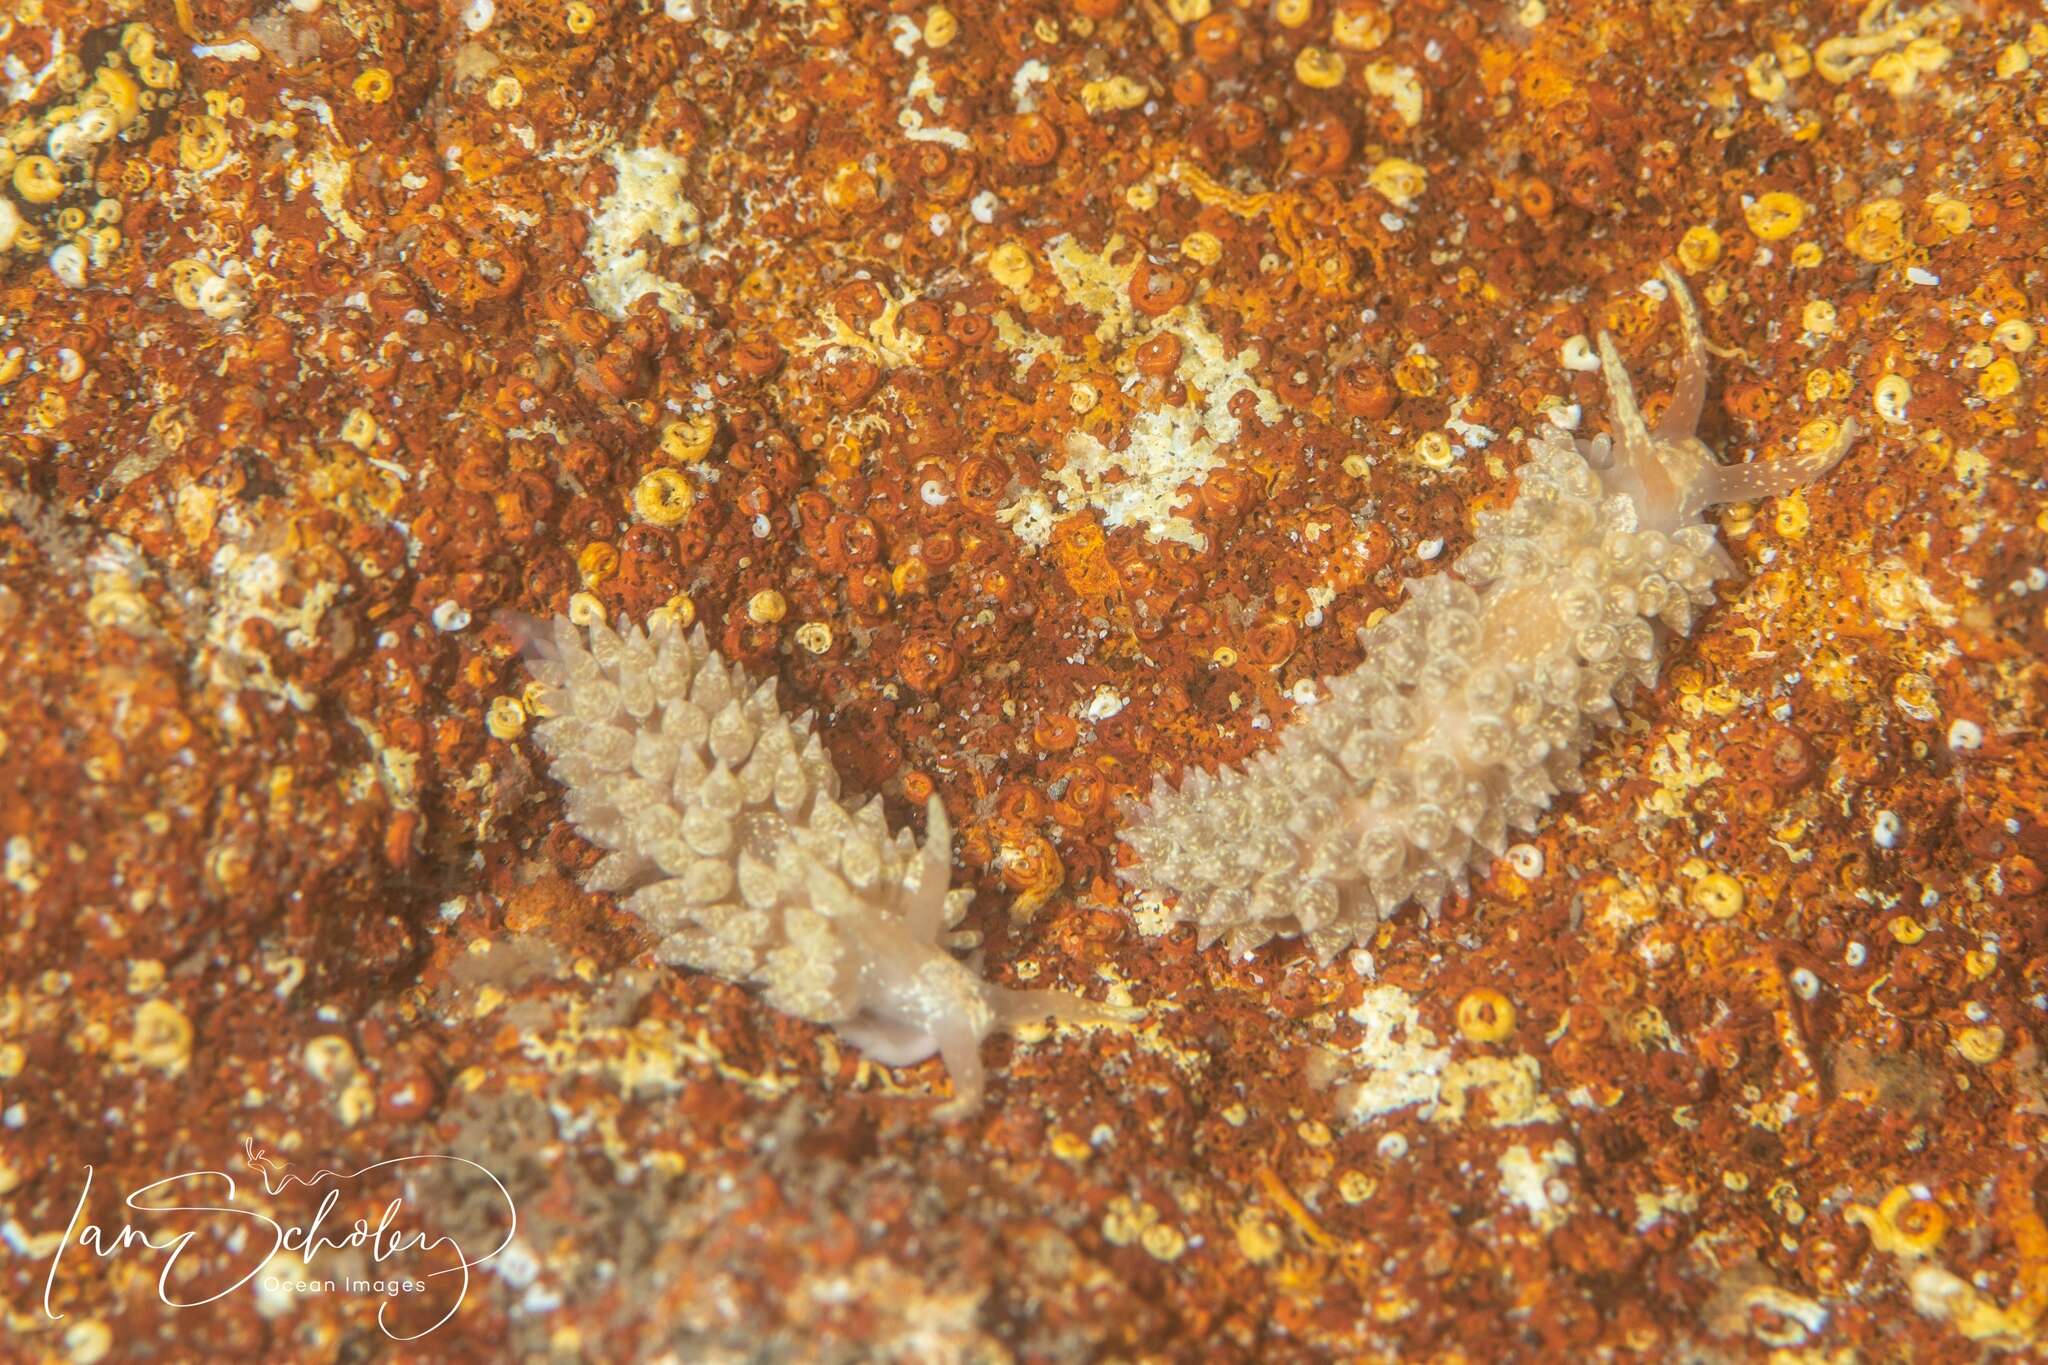 Image of Transluscent large cerrata slug